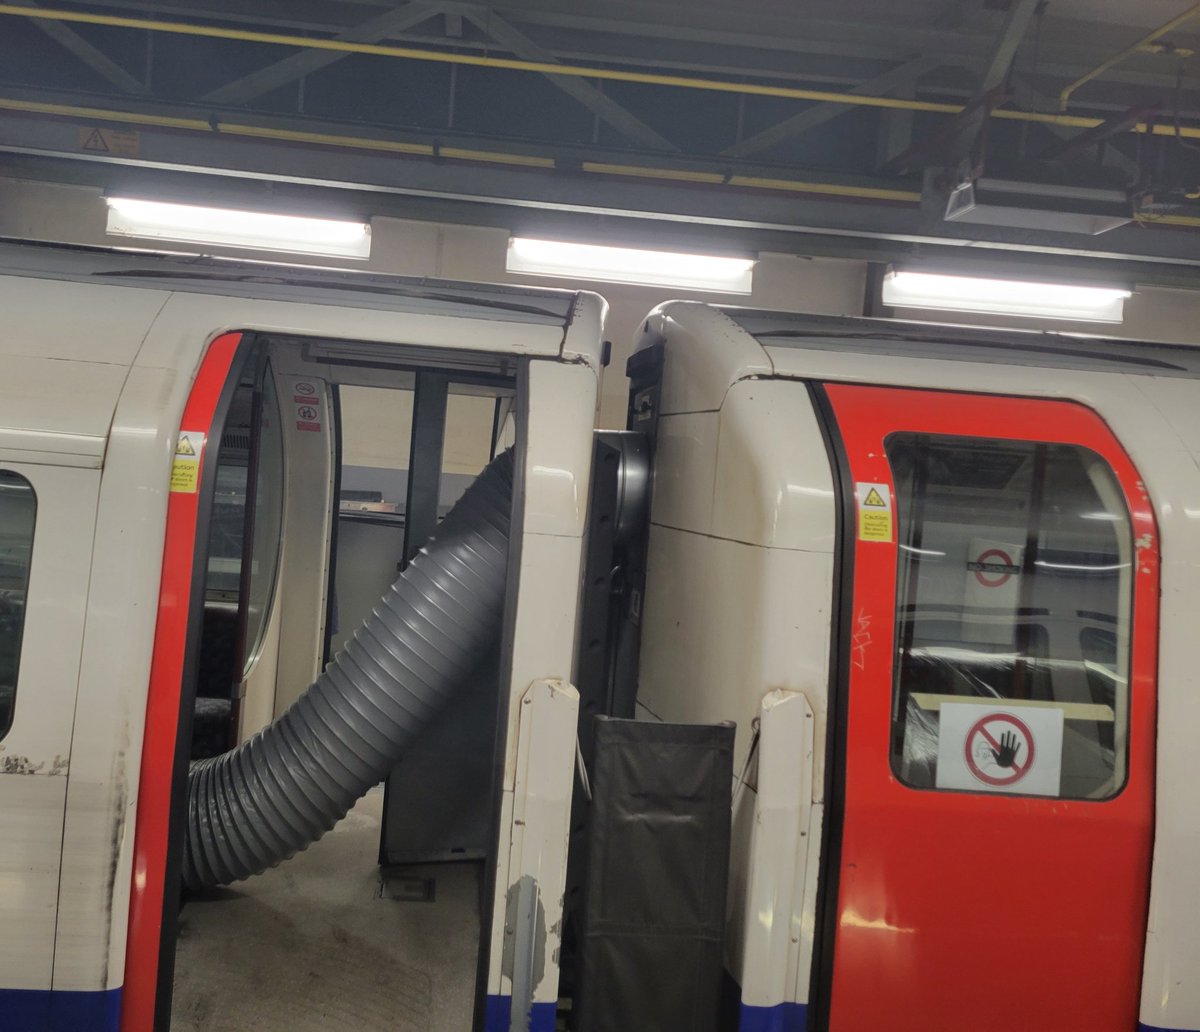 Vacuum packed #Tube train. 
#WhatYouDontSee #Maintenance #LondonUnderground #London #LondonLife #Transport #Train #Depot #TrainEngineers #UnsungHeros